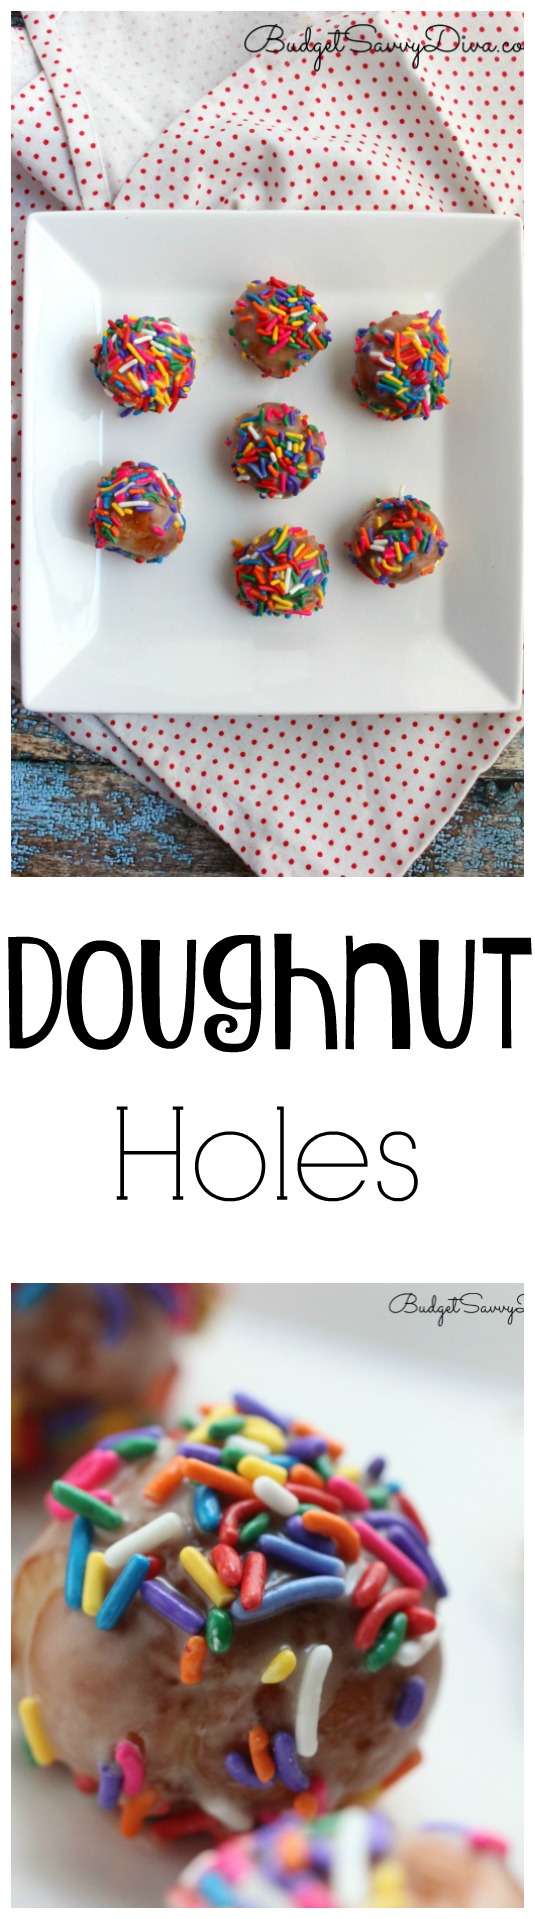 Doughnut Holes